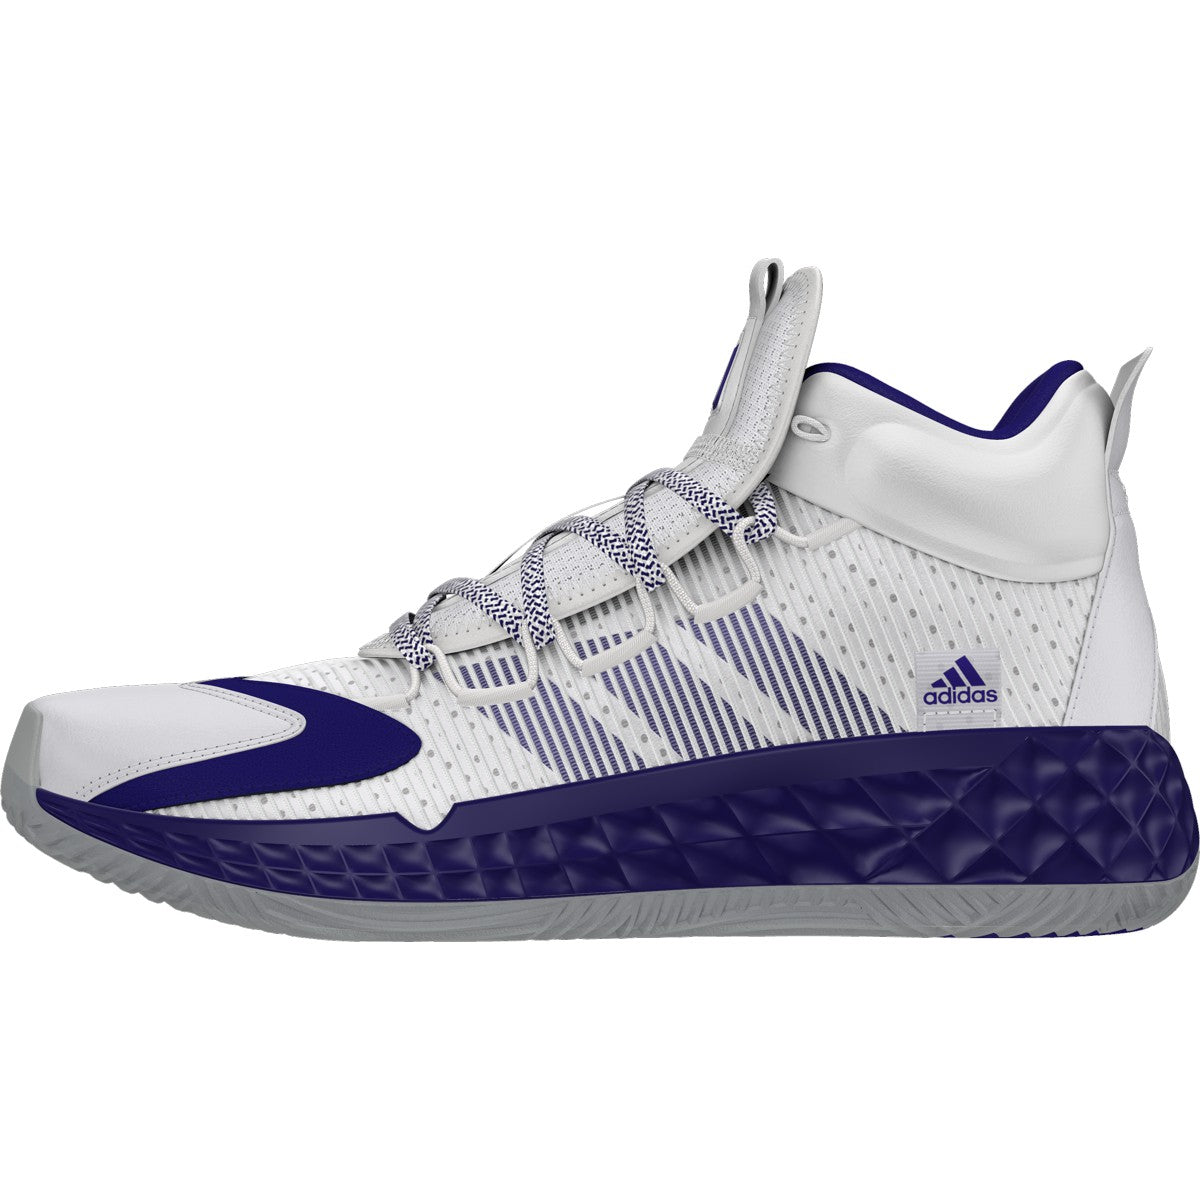 Adidas Pro Boost Mid 2020 White/Purple FW9517 – Sporting Goods